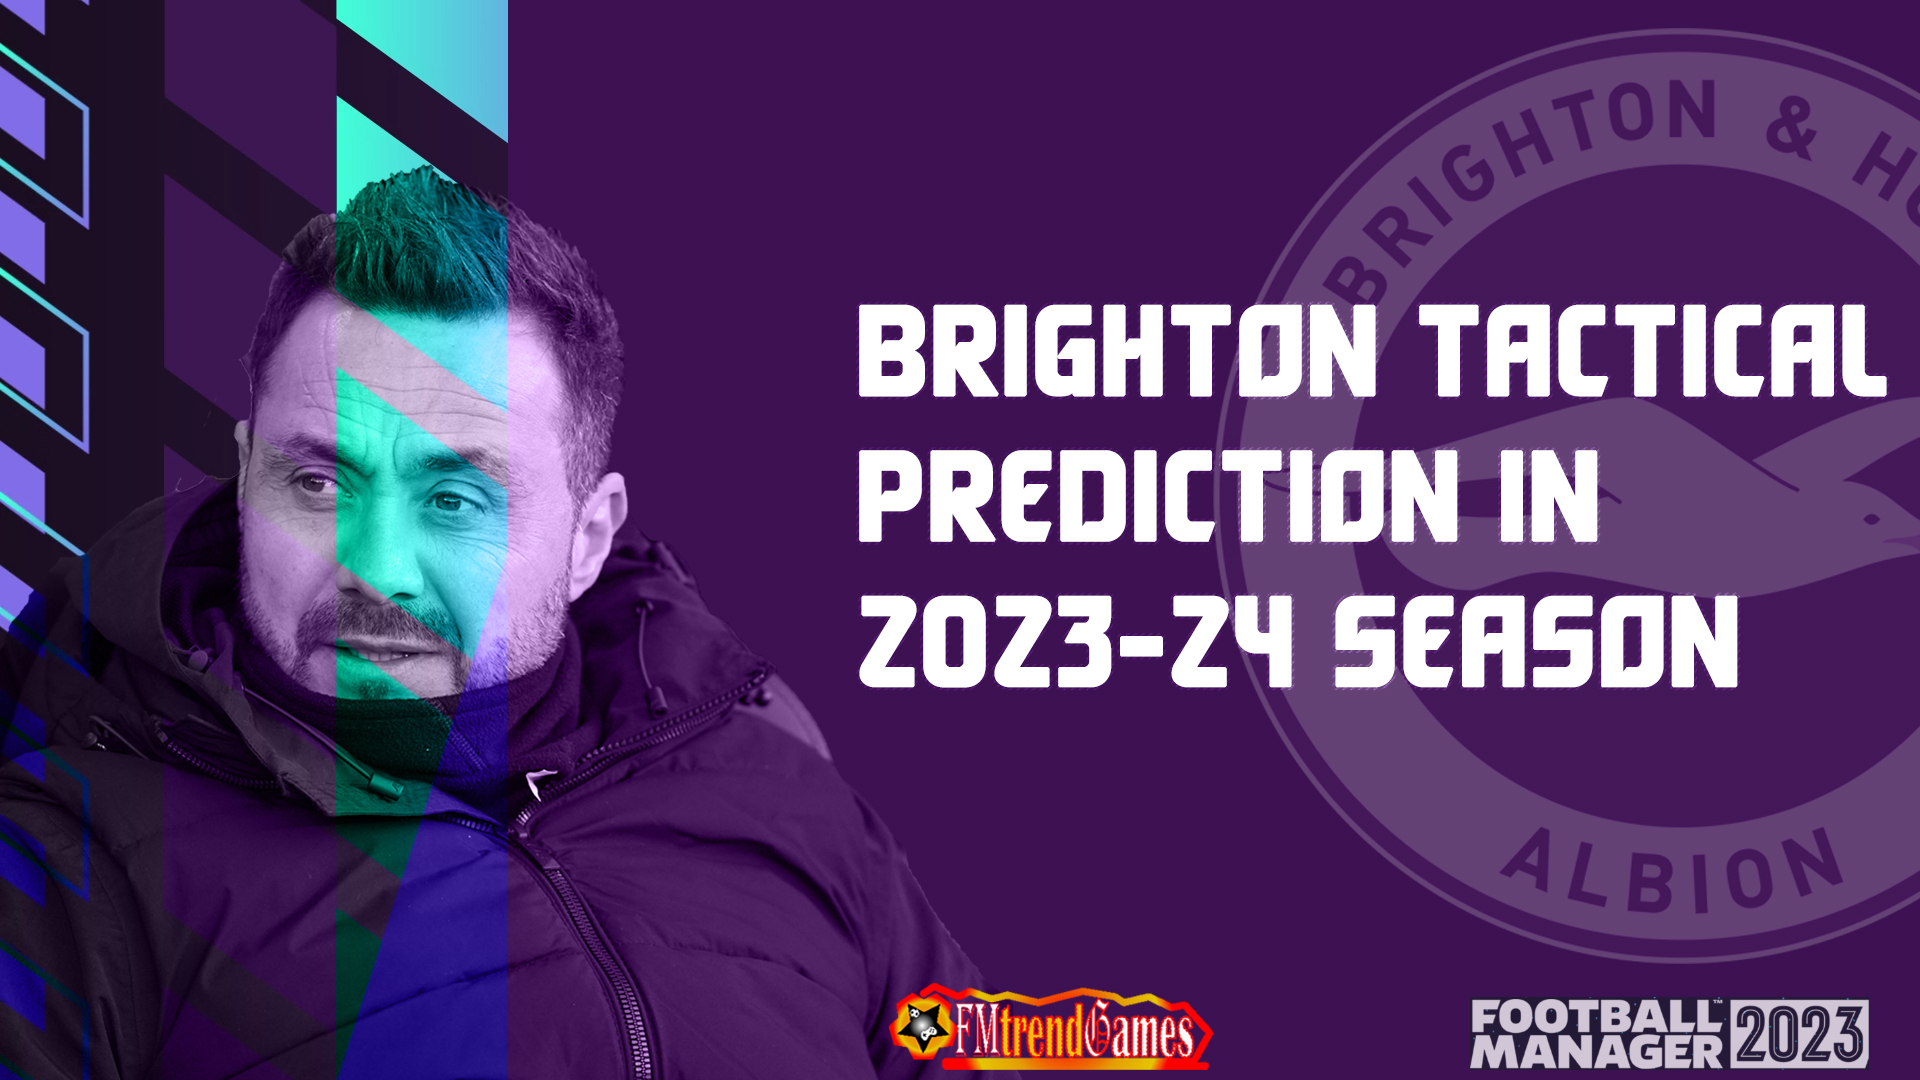 Brighton and Hove Albion Tactical Prediction Next Season